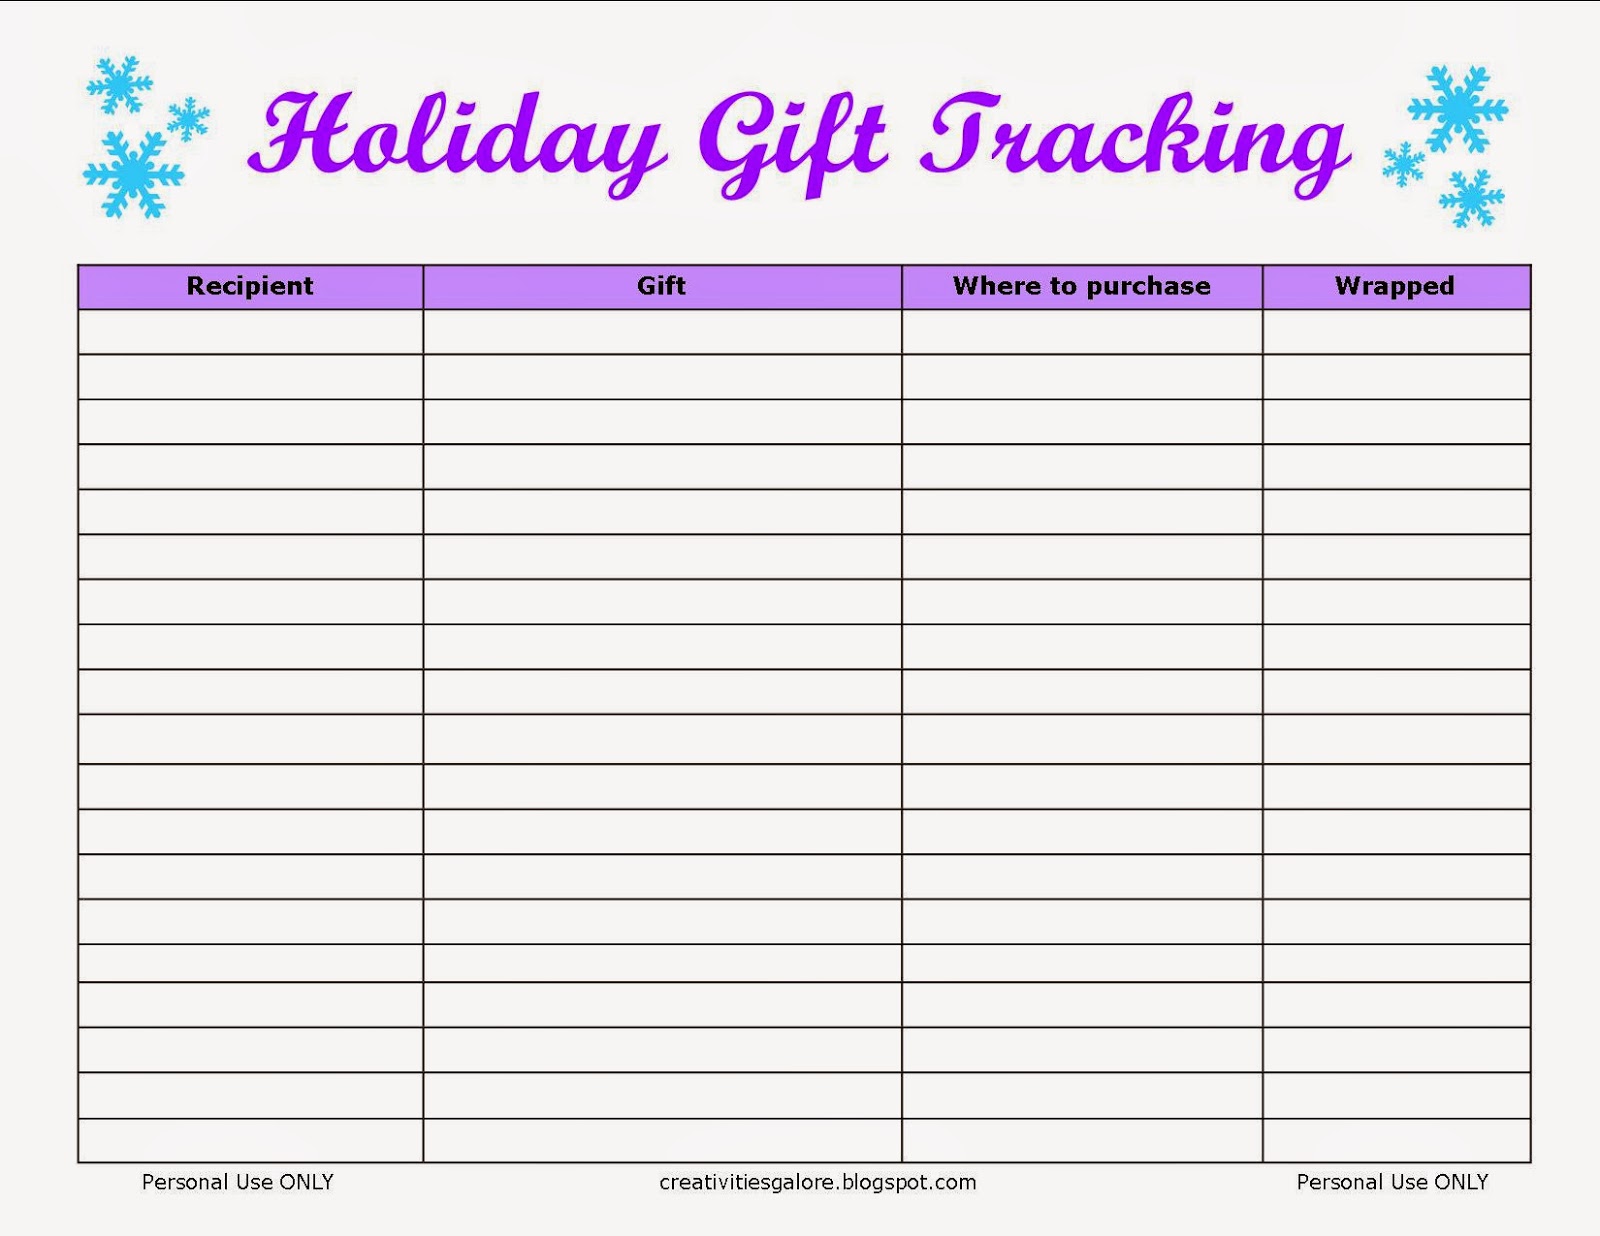 free-holiday-gift-tracking-sheet-creativities-galore